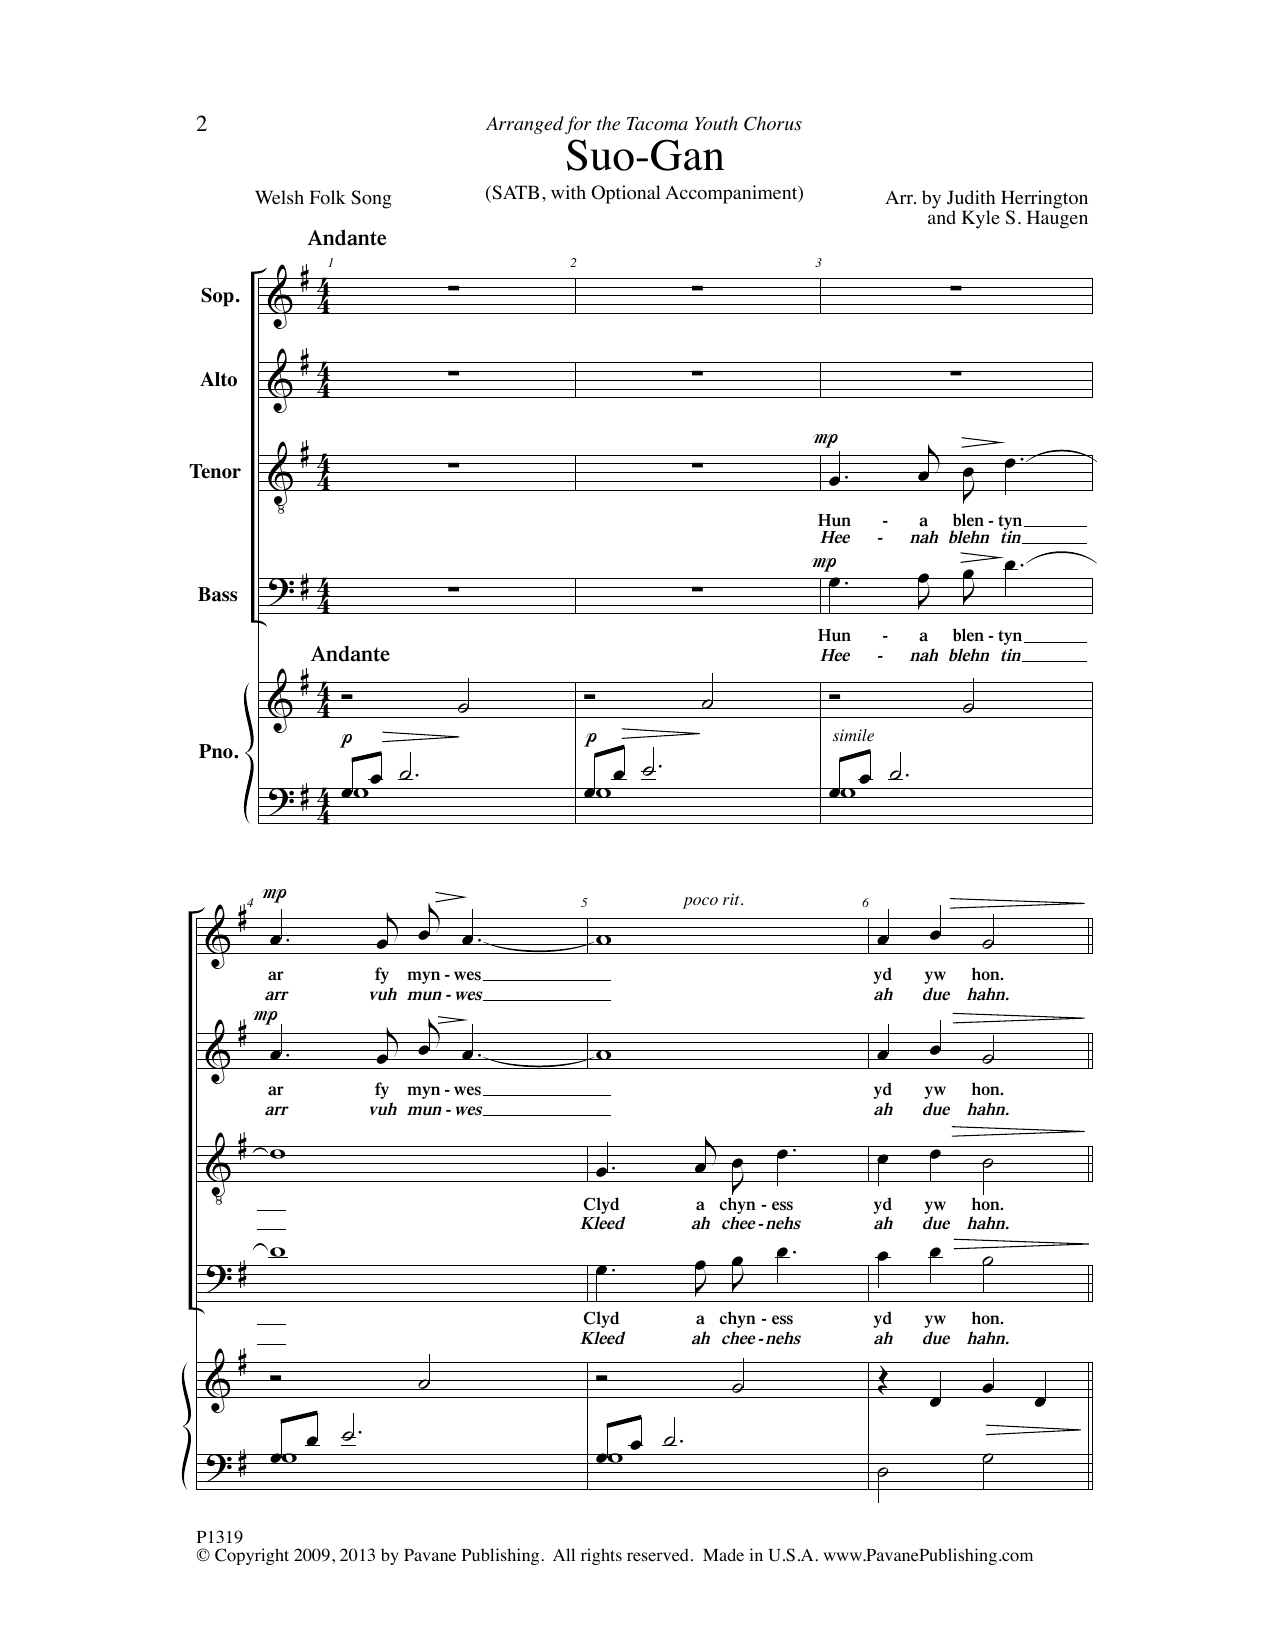 Judith Herrington/ Kyle Haugen Suo-Gan Sheet Music Notes & Chords for Choral - Download or Print PDF